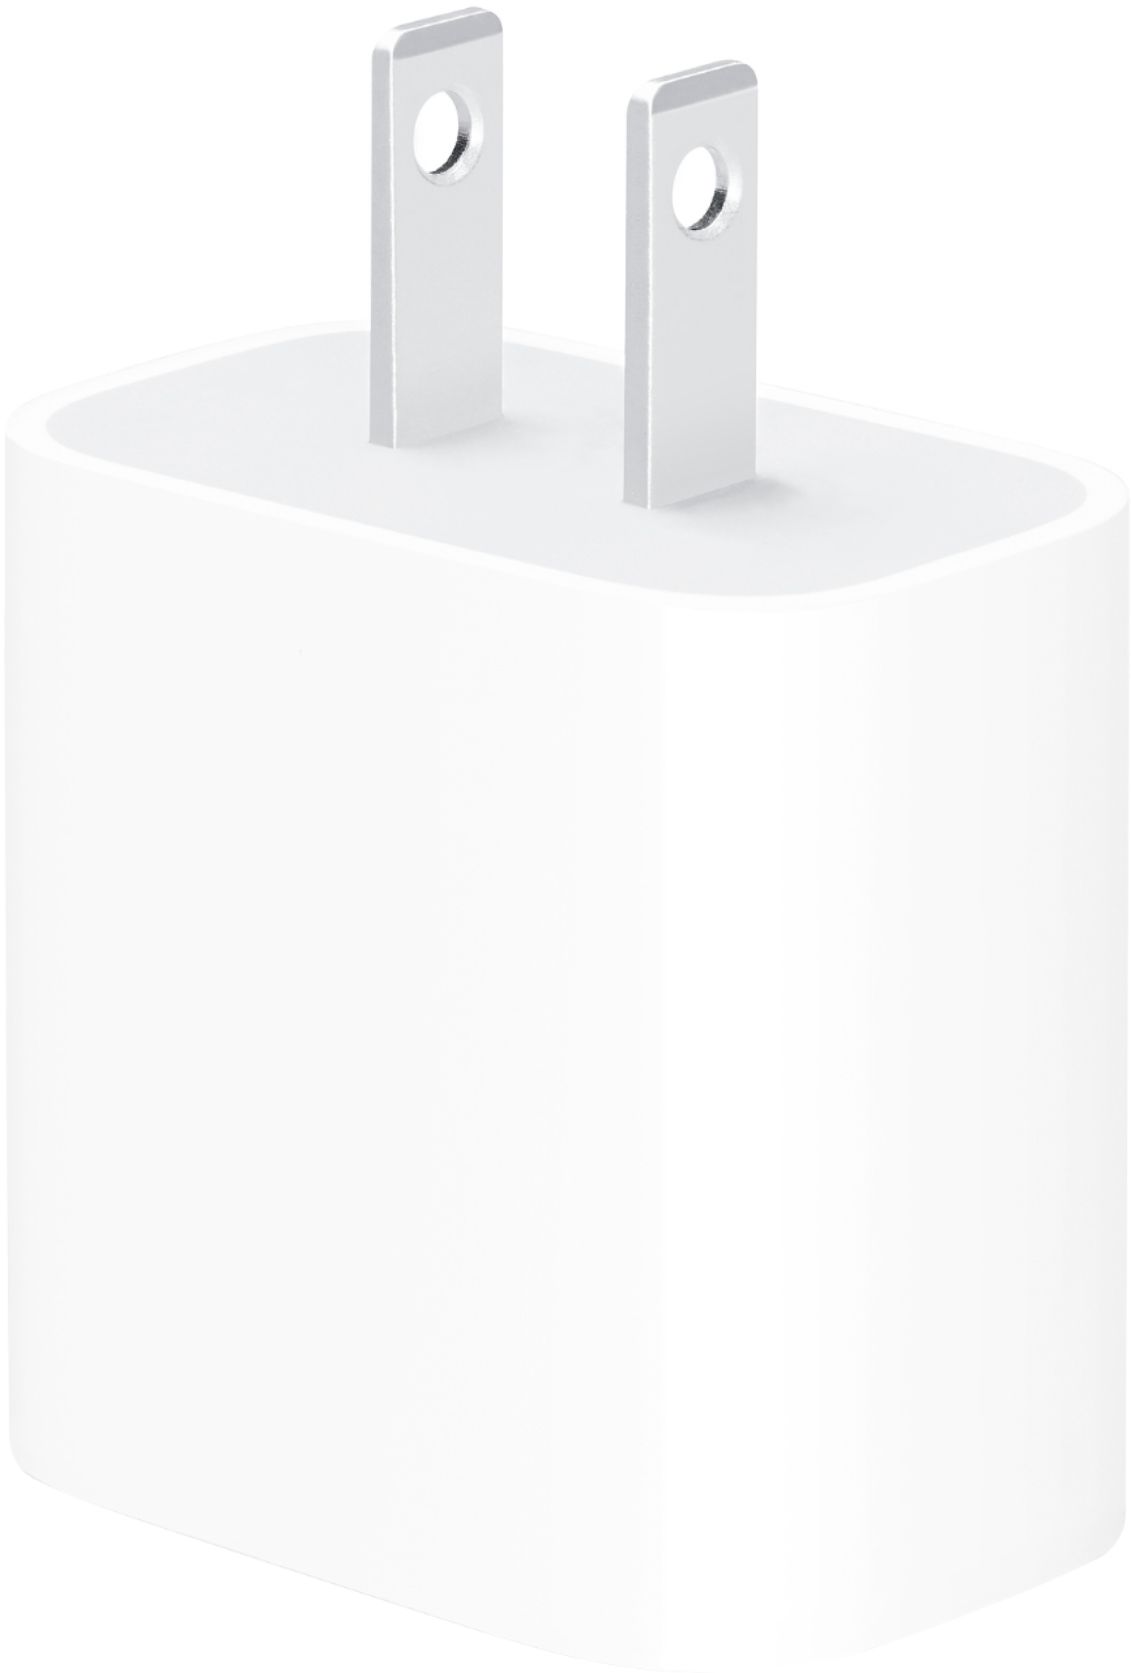 Apple - 20W USB-C Power Adapter - White …